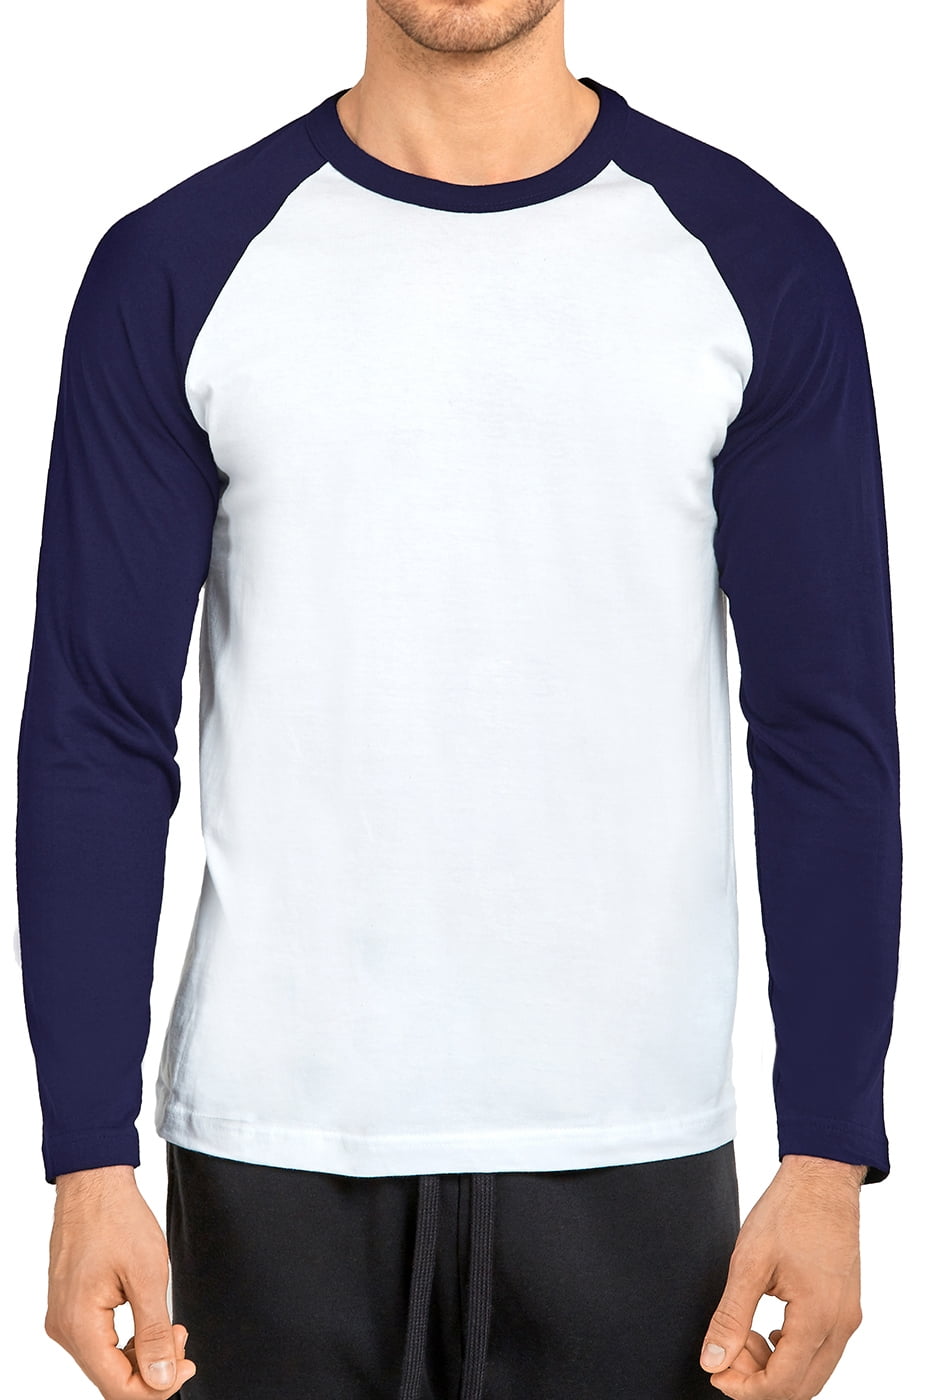 Men Men Tops Mens Raglan Sports T-Shirt Tee Tops Baseball Cotton Long Sleeve